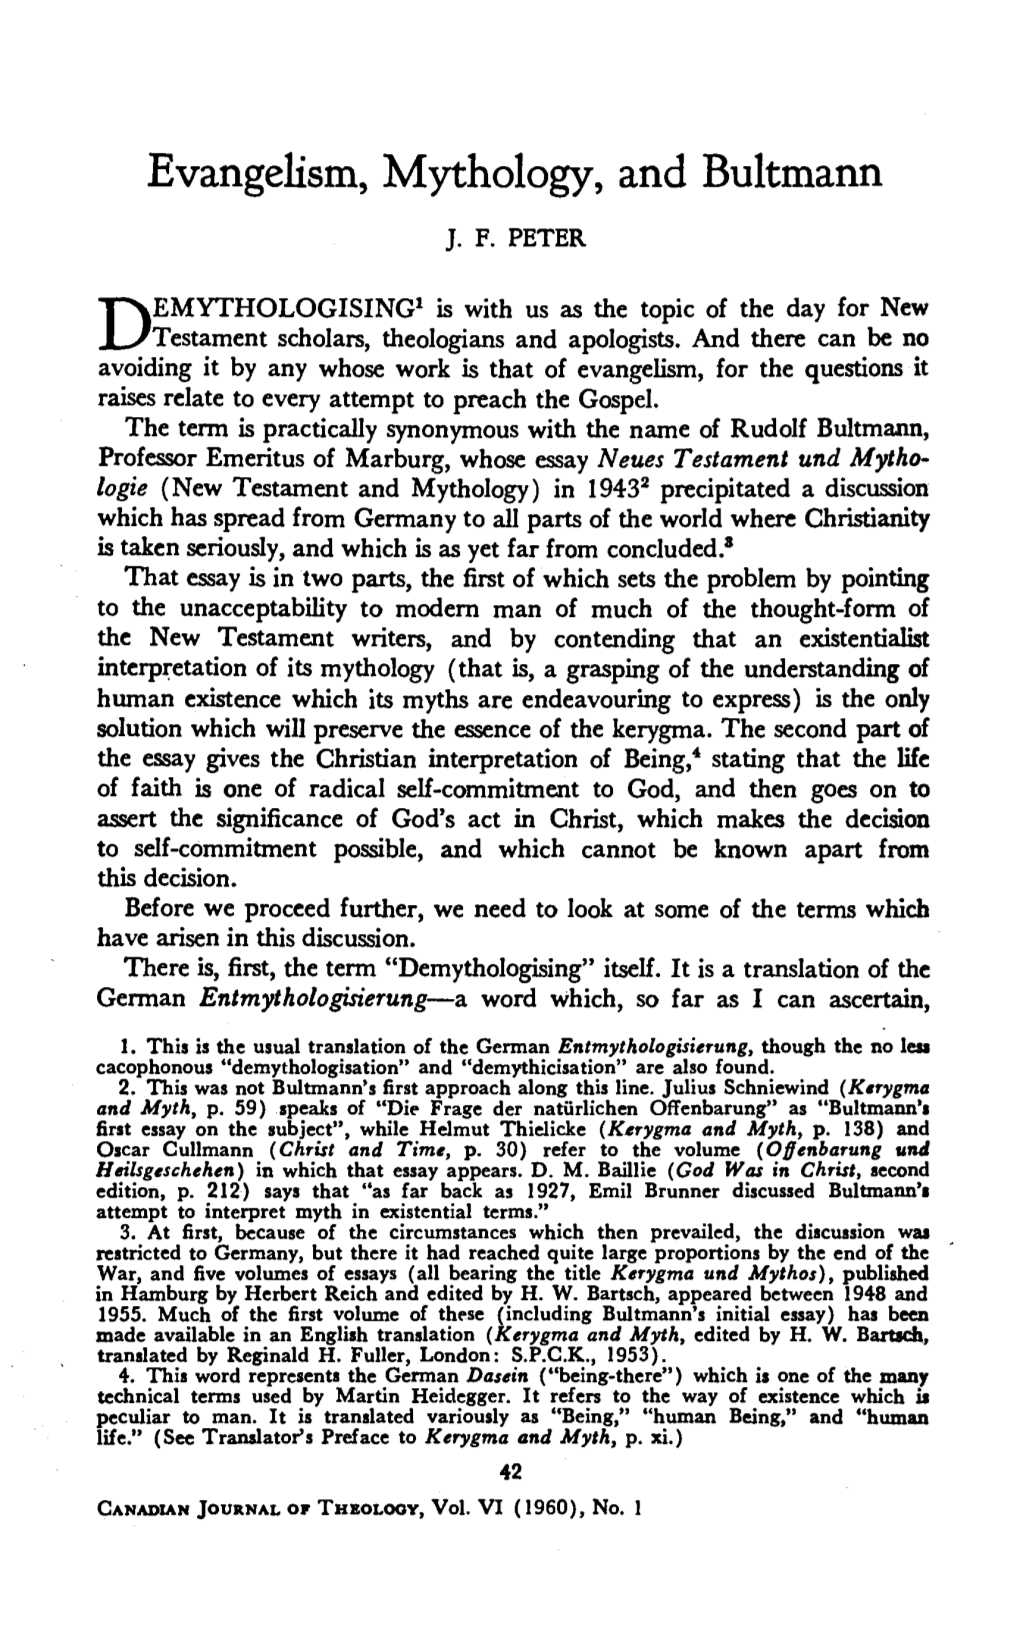 J.F. Peter, "Evangelism, Mythology, and Bultmann," Canadian Journal of Theology 6.1 (Jan. 1960): 42-52